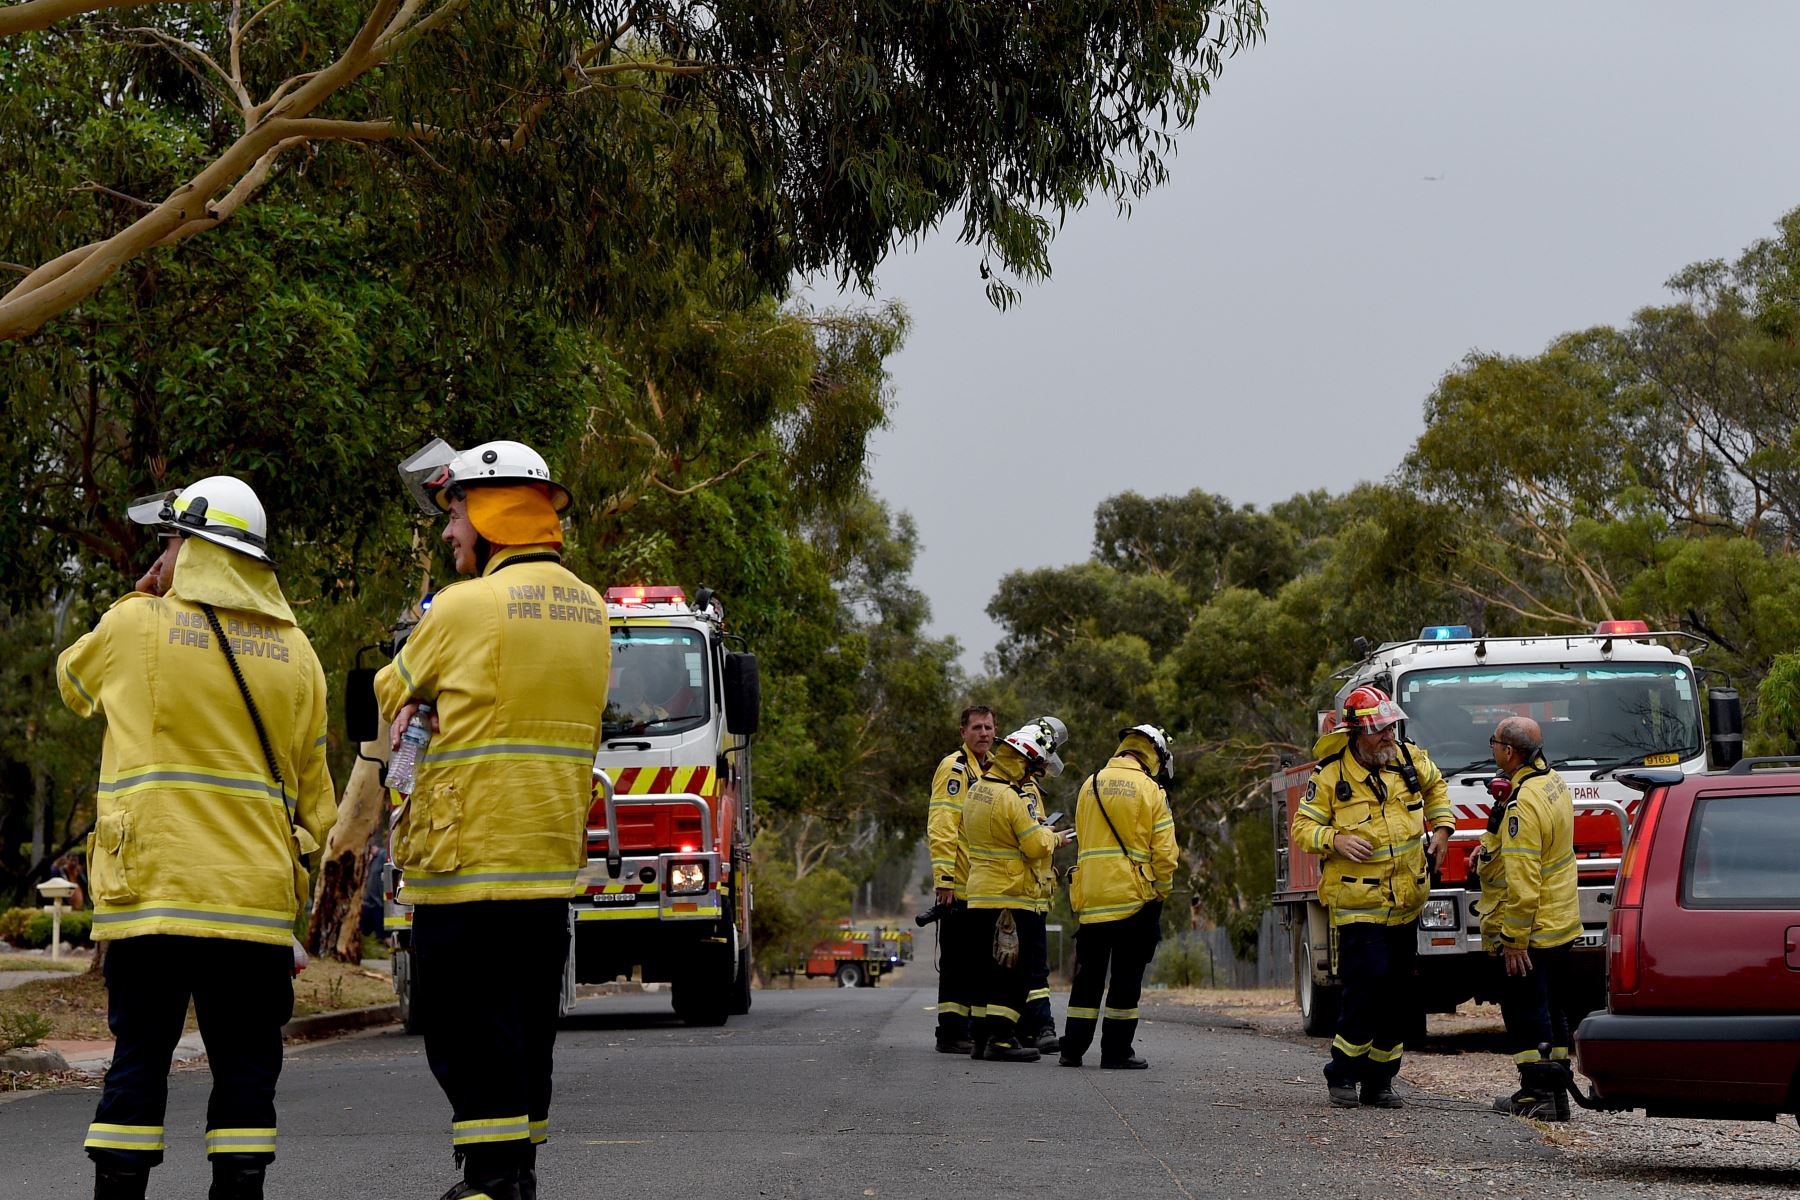 Los bomberos se reúnen cerca de un incendio forestal, cerca de Voyager Point, Sydney, Australia.
Foto: AFP